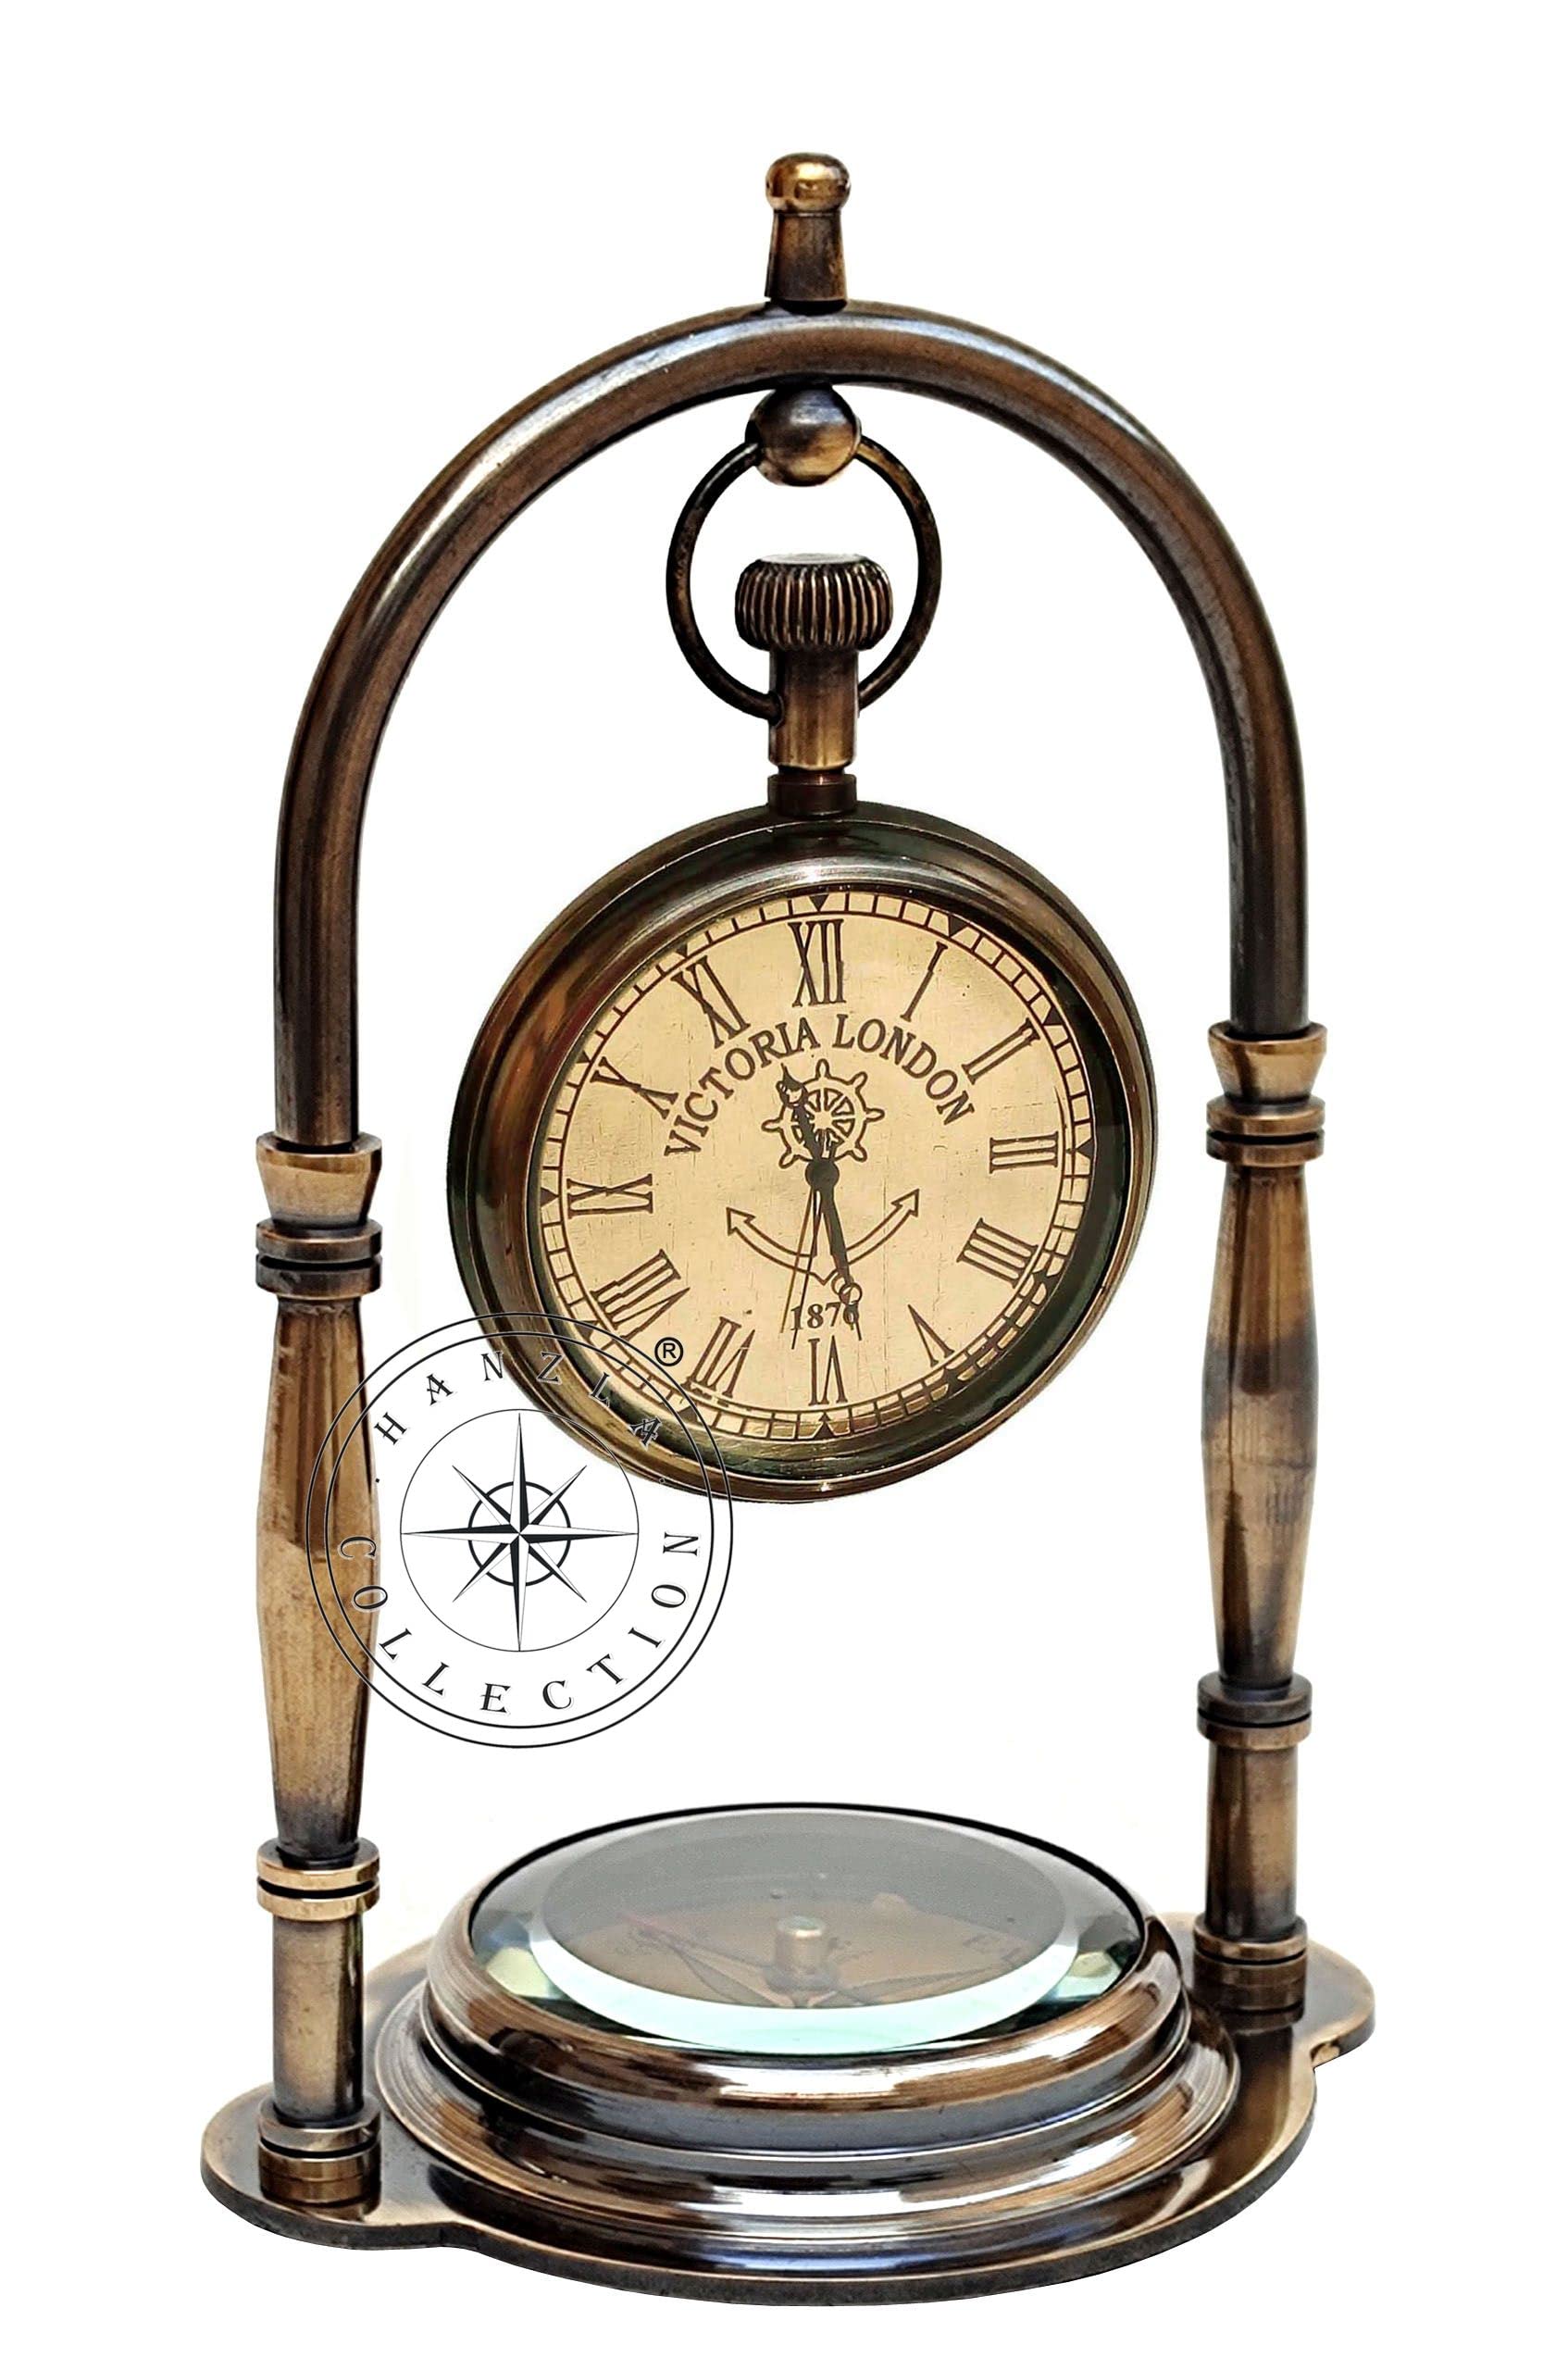 Hanzla Collection Maritime Compass Base Nautical Table Clock Antique Brass Hanging Desk Clock Victoria London Pocket Watch